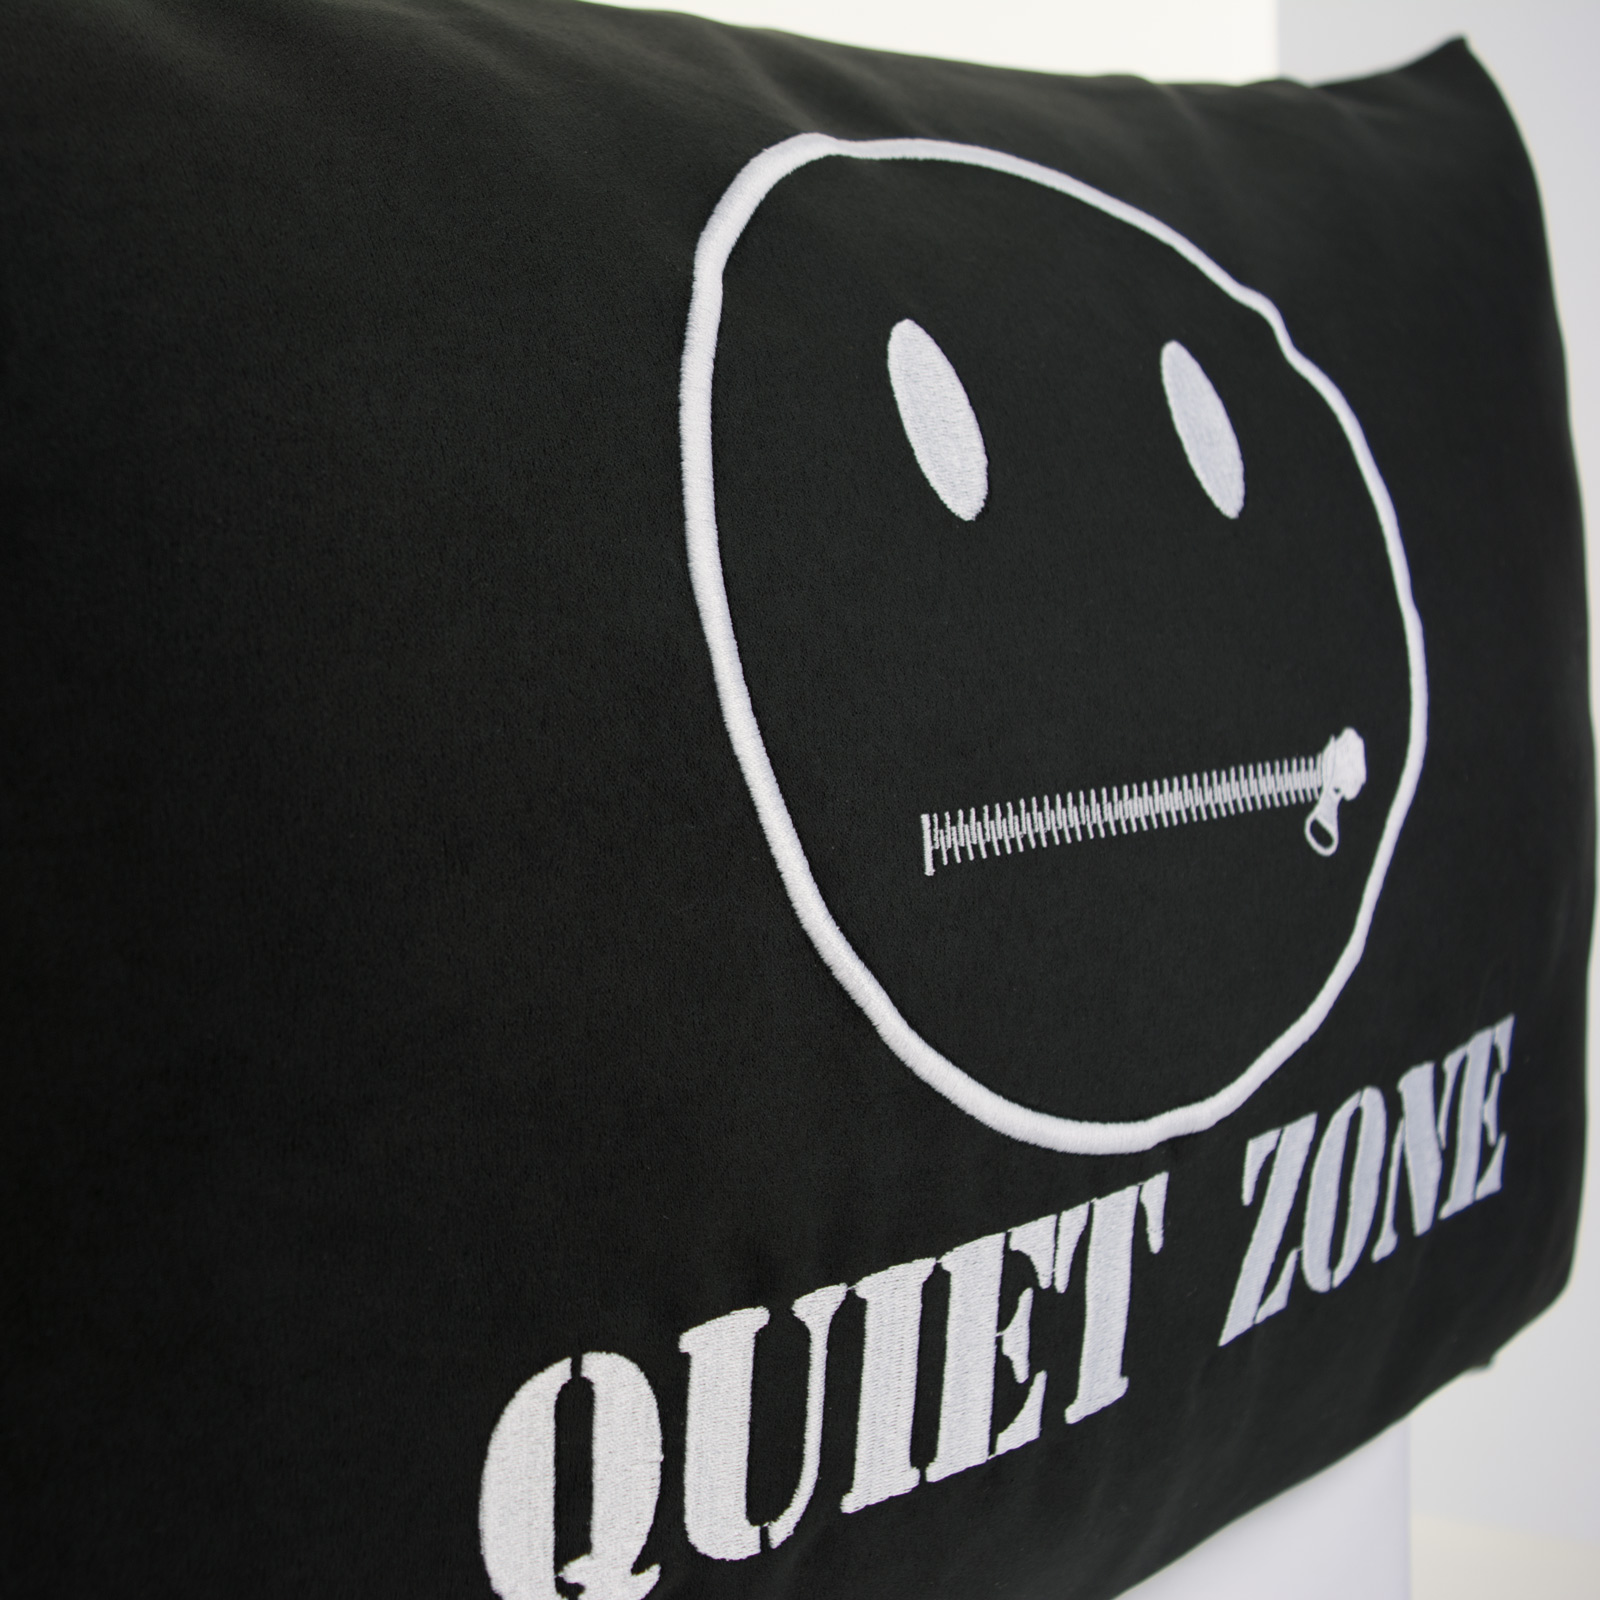 Quiet Zone - Kissen